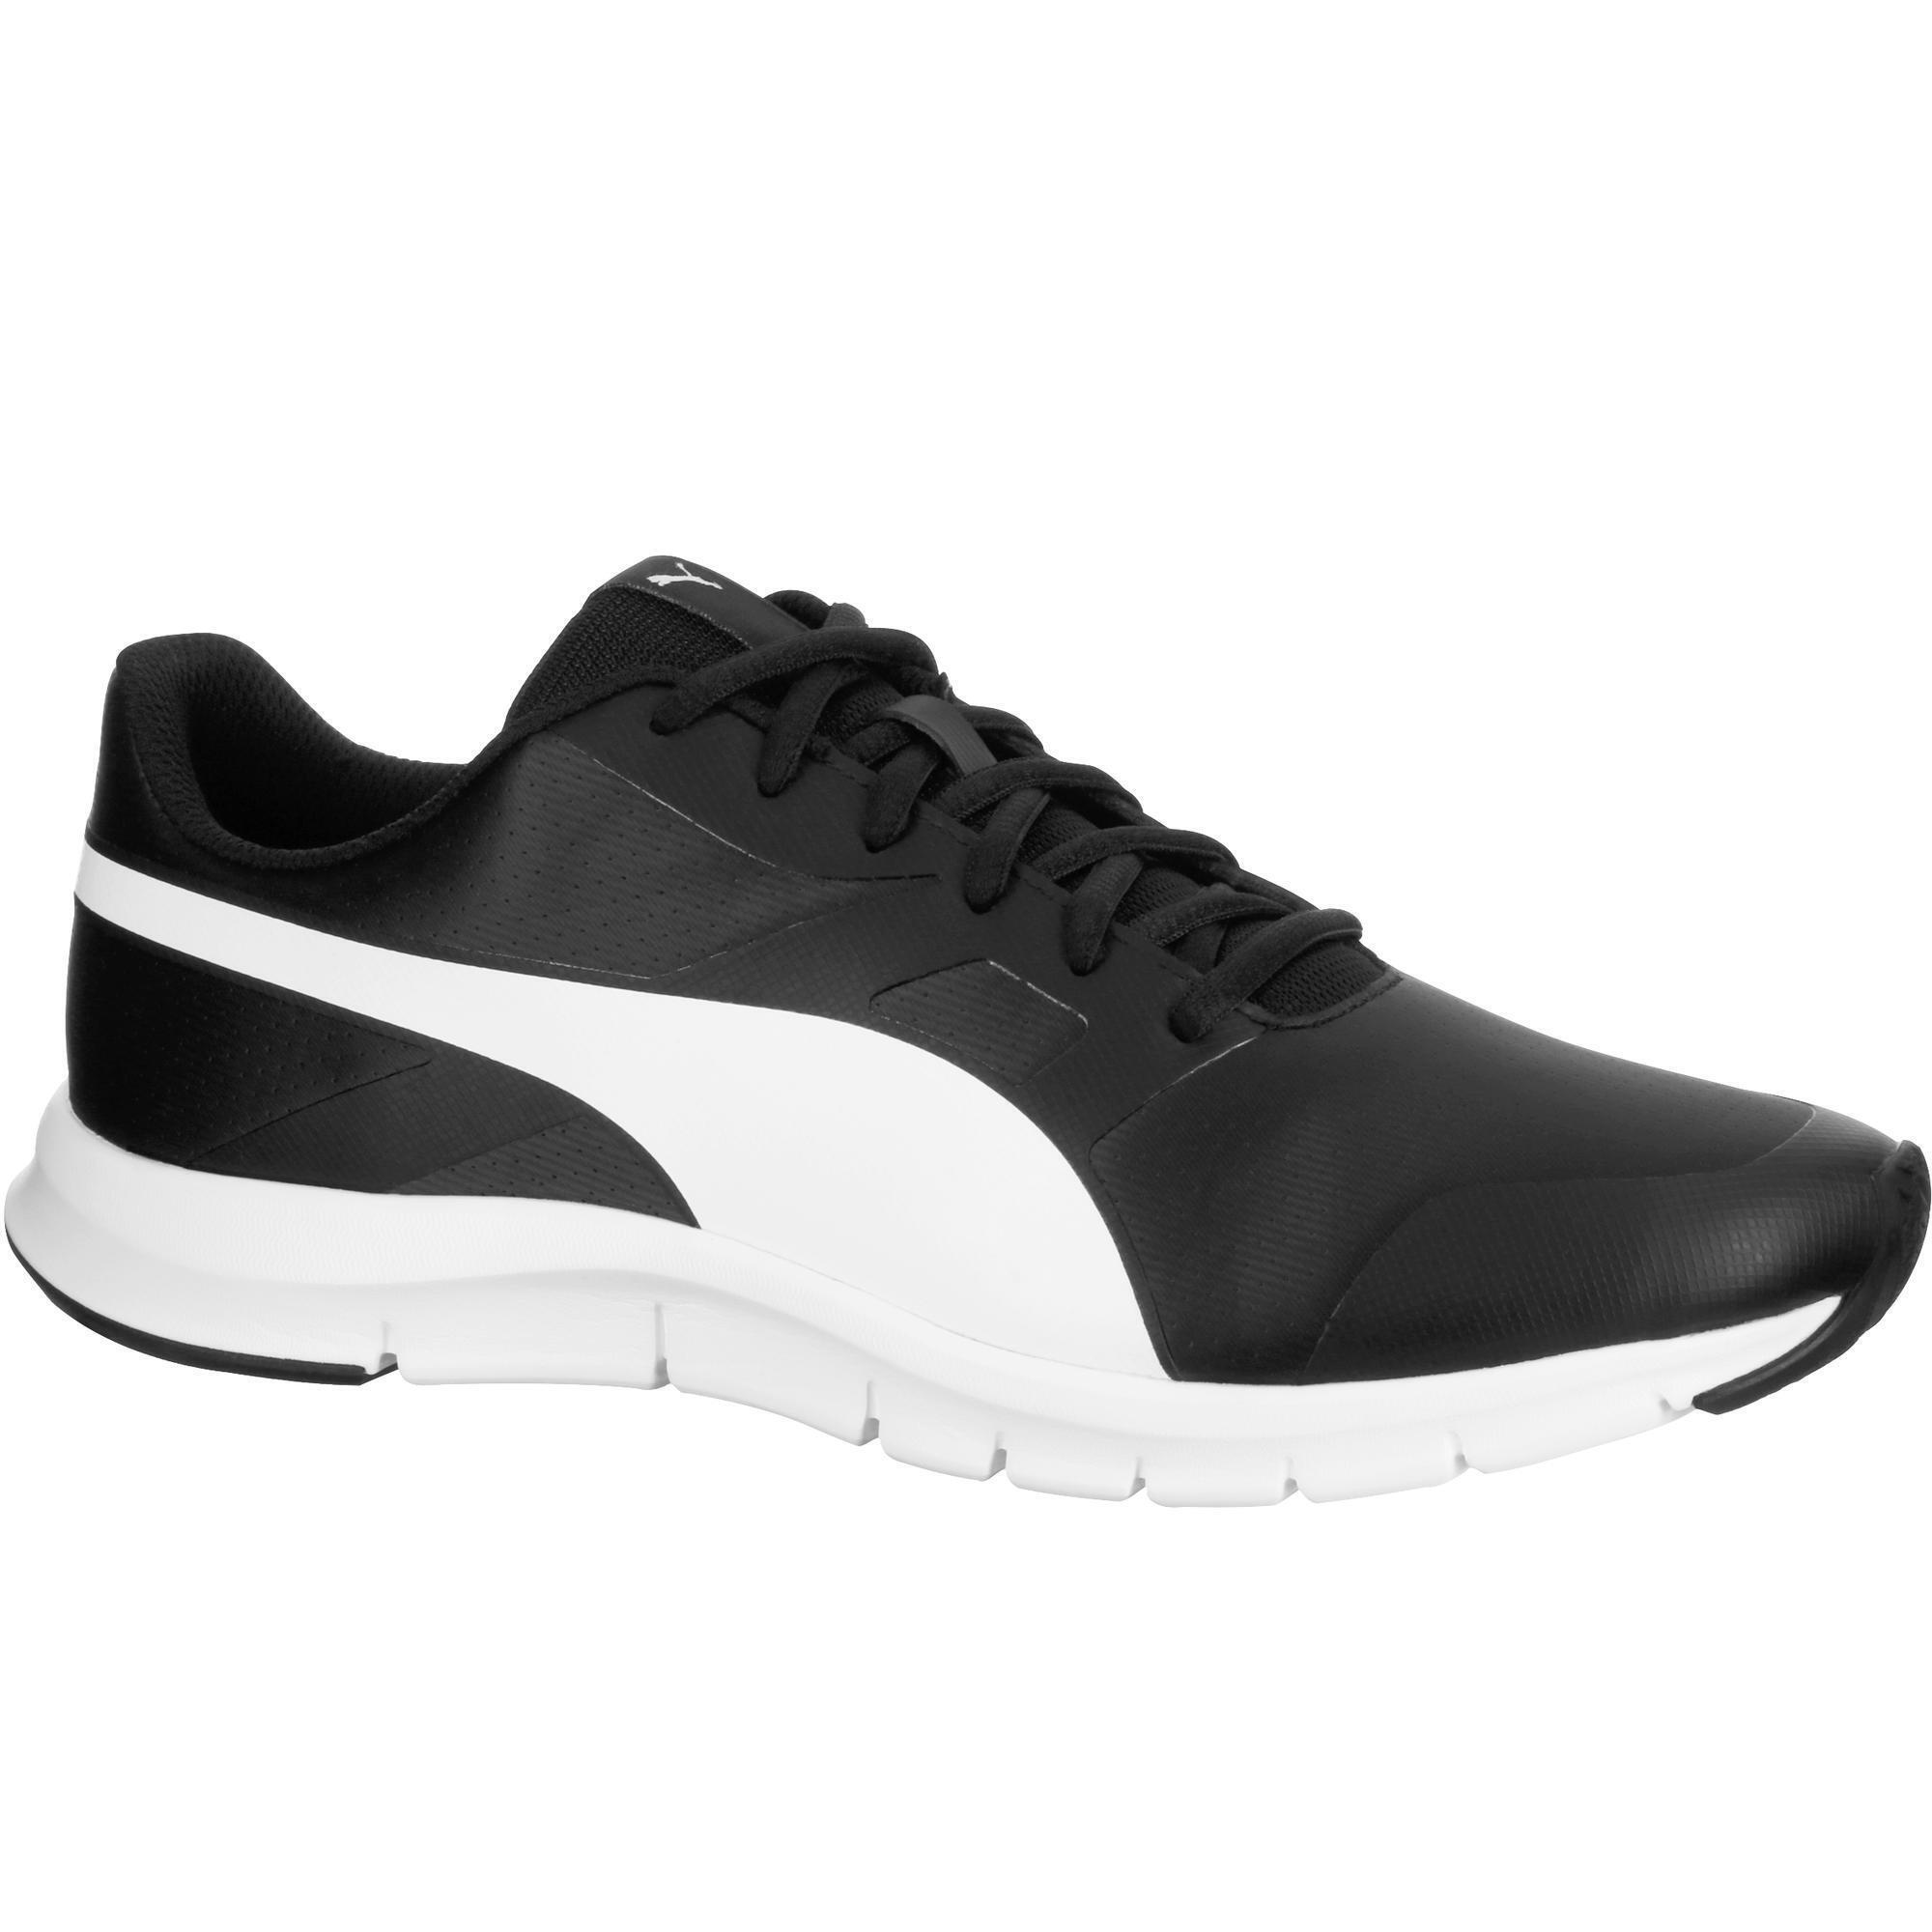 Flexracer men's active walking shoes - black 1/9